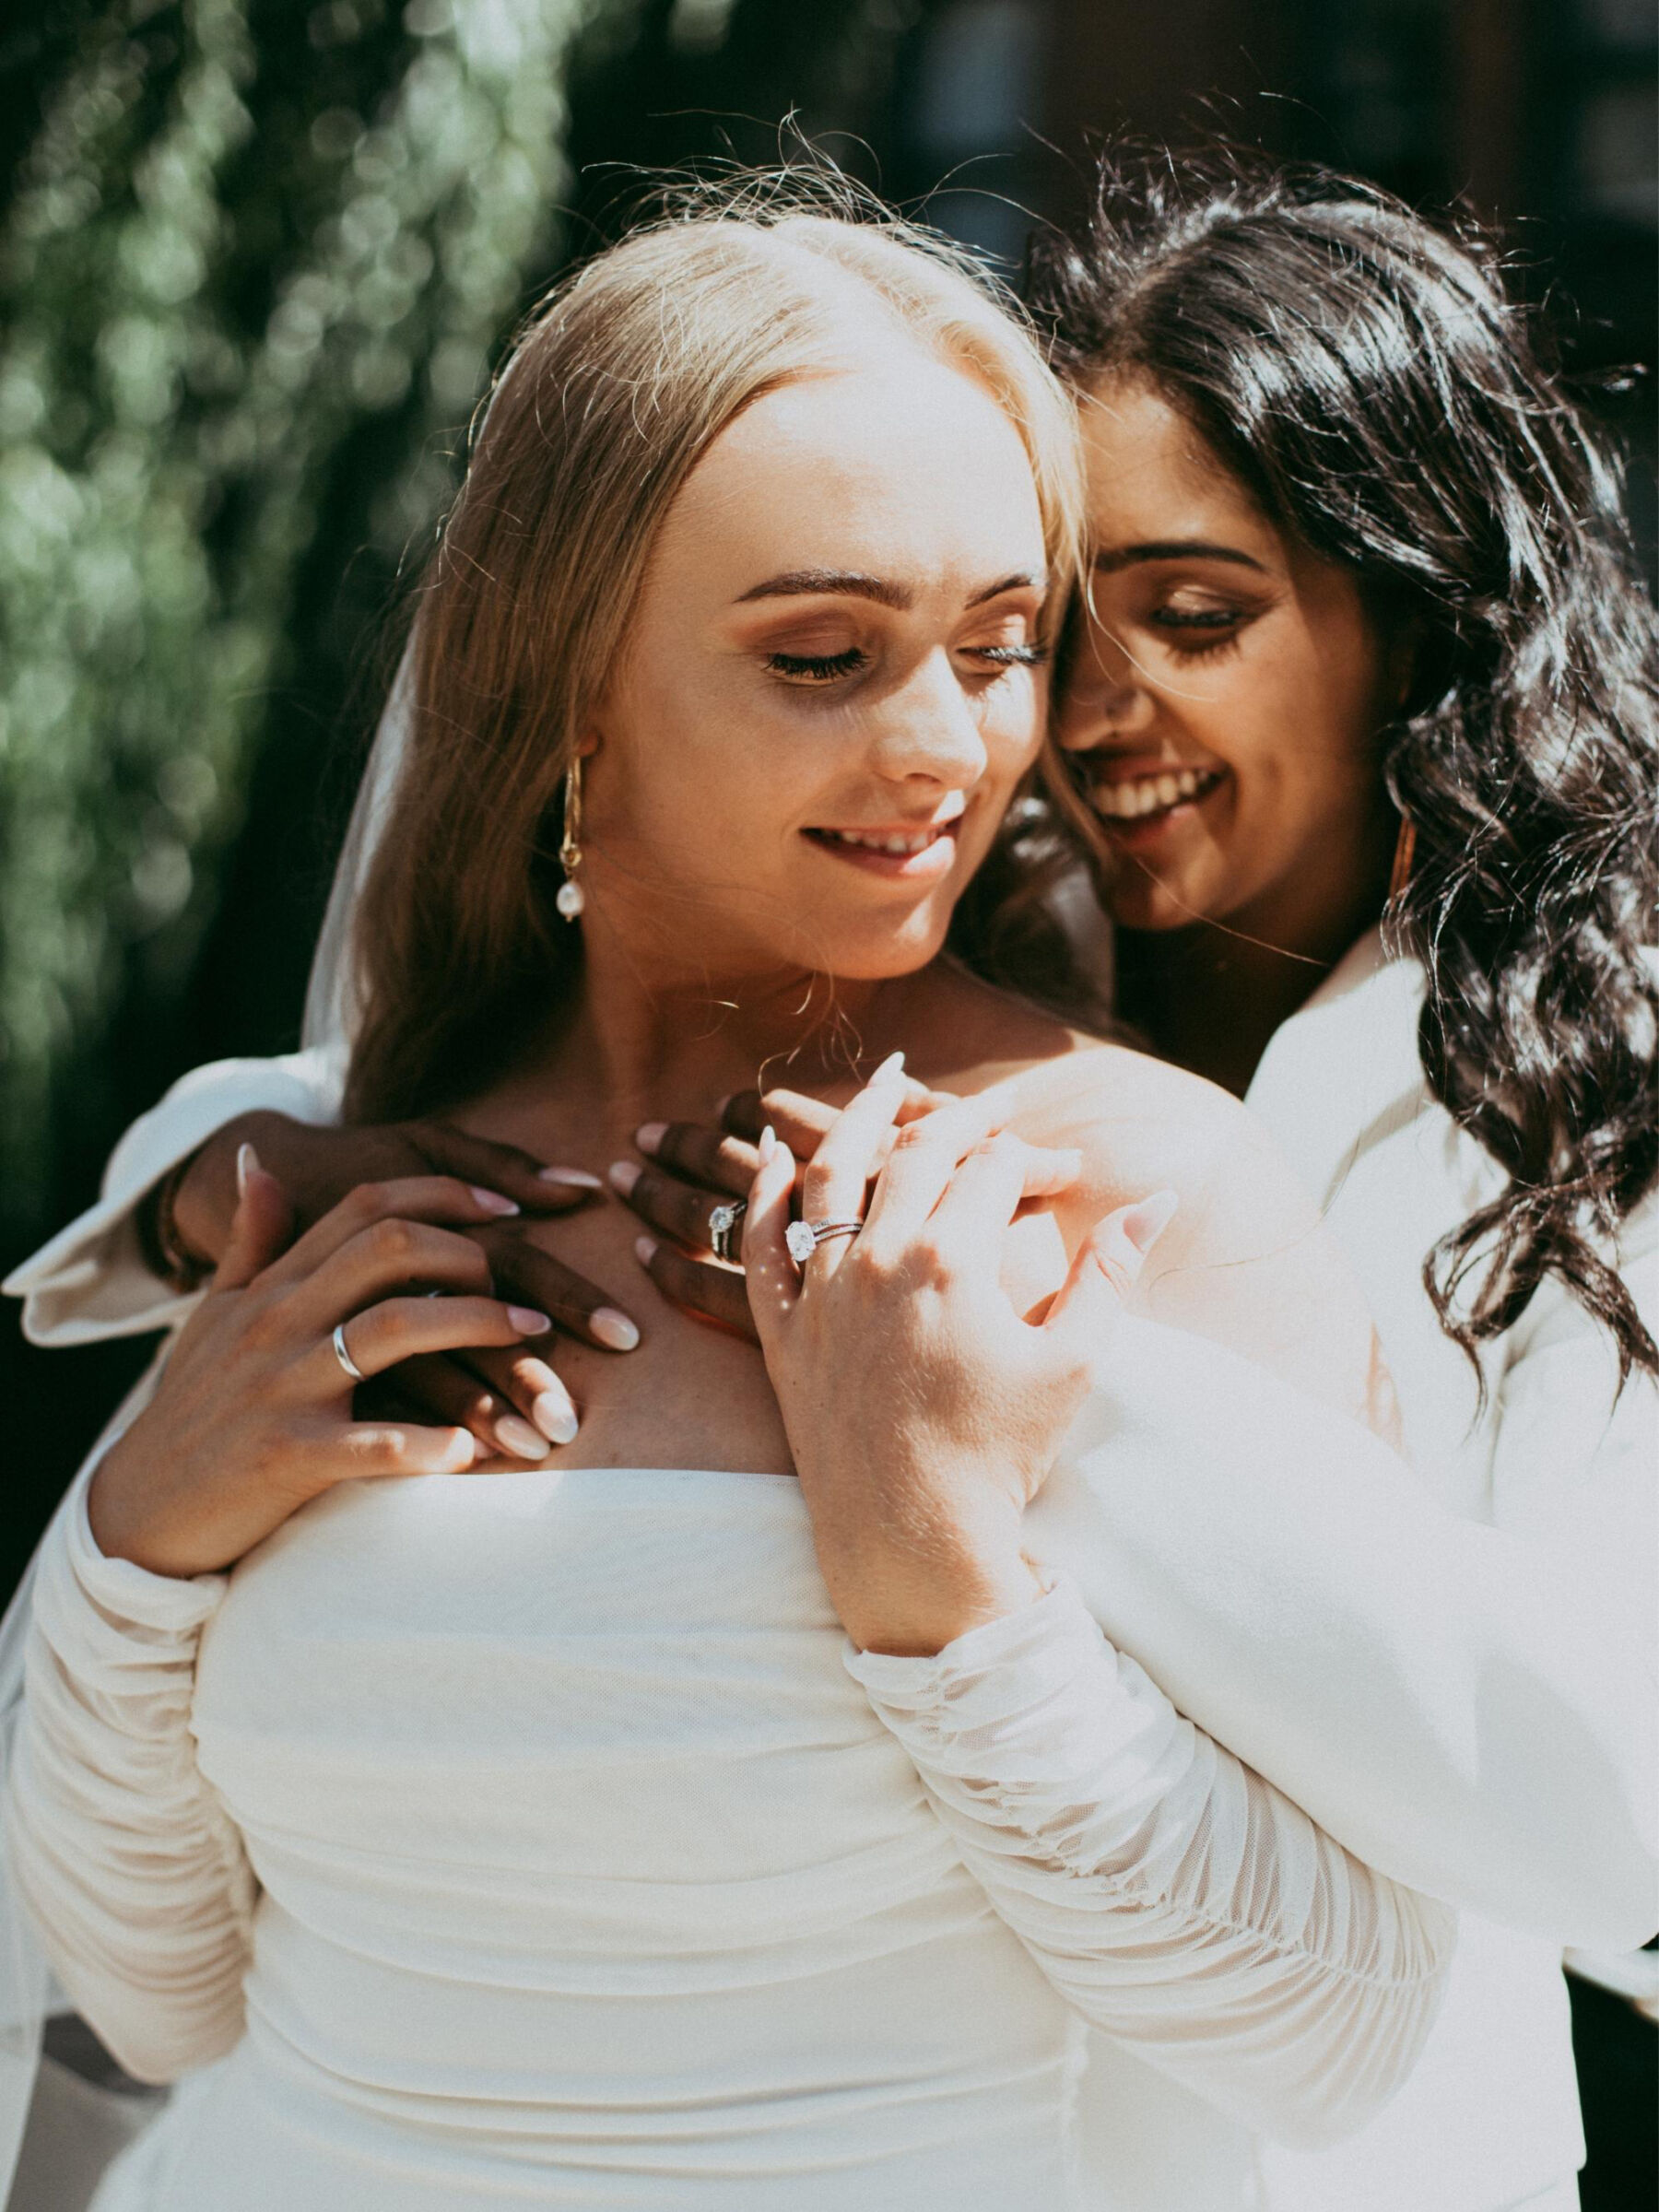 Lesbian brides in loving embrace. Daniel Mice Photography.